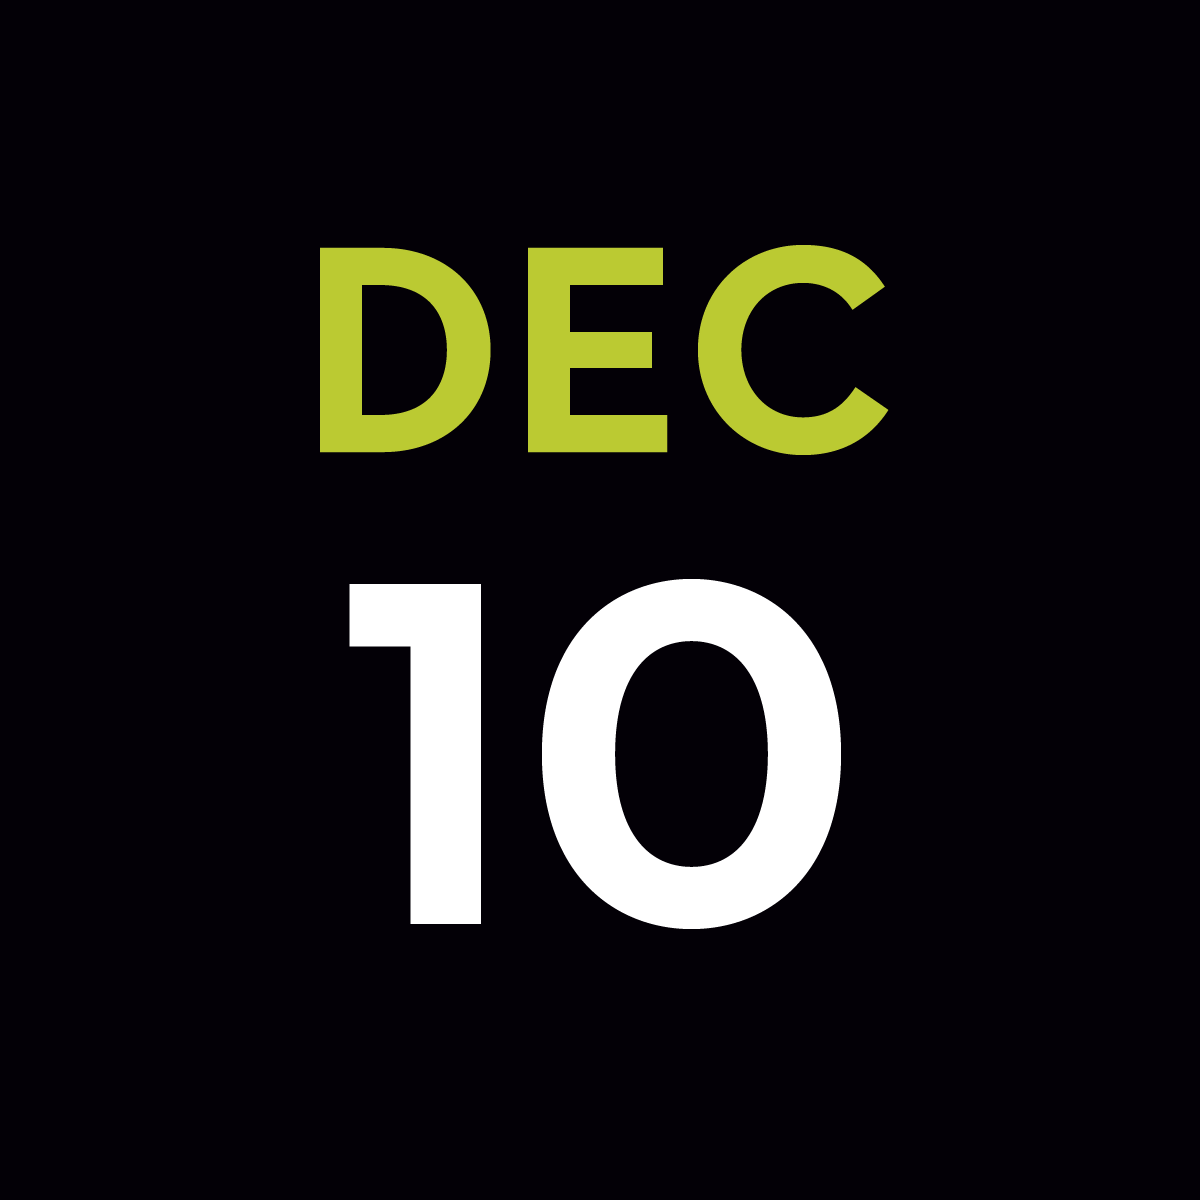 December 10 Icon